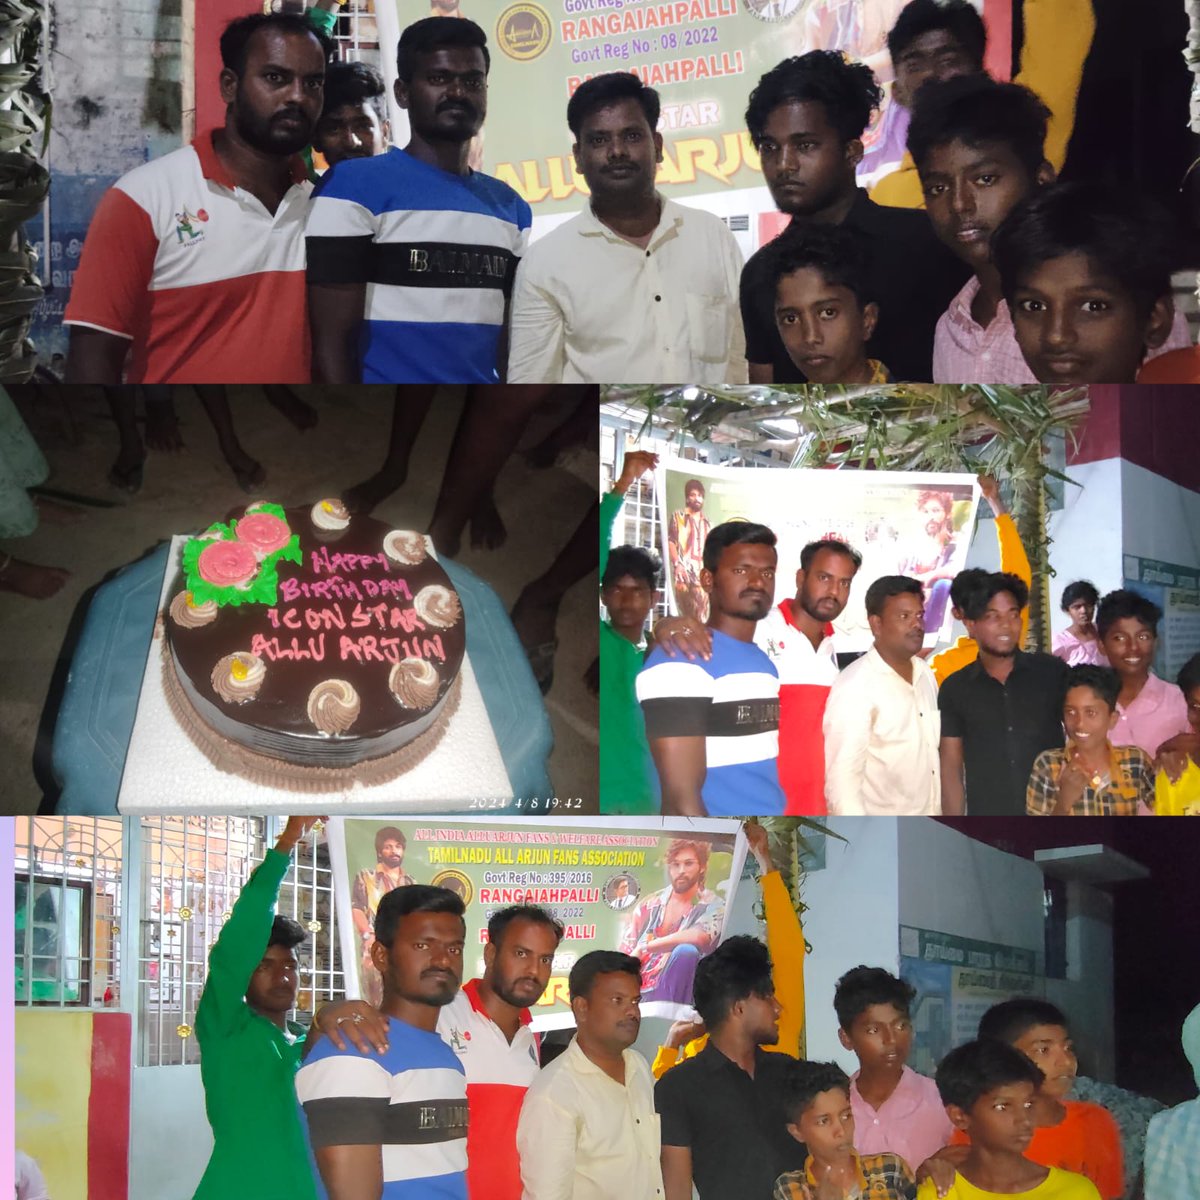 Allu Arjun Birthday Celebrations TAMIL Nadu Allu Arjun Fans Association - Rangapalli #HappyBirthdayAlluArjun